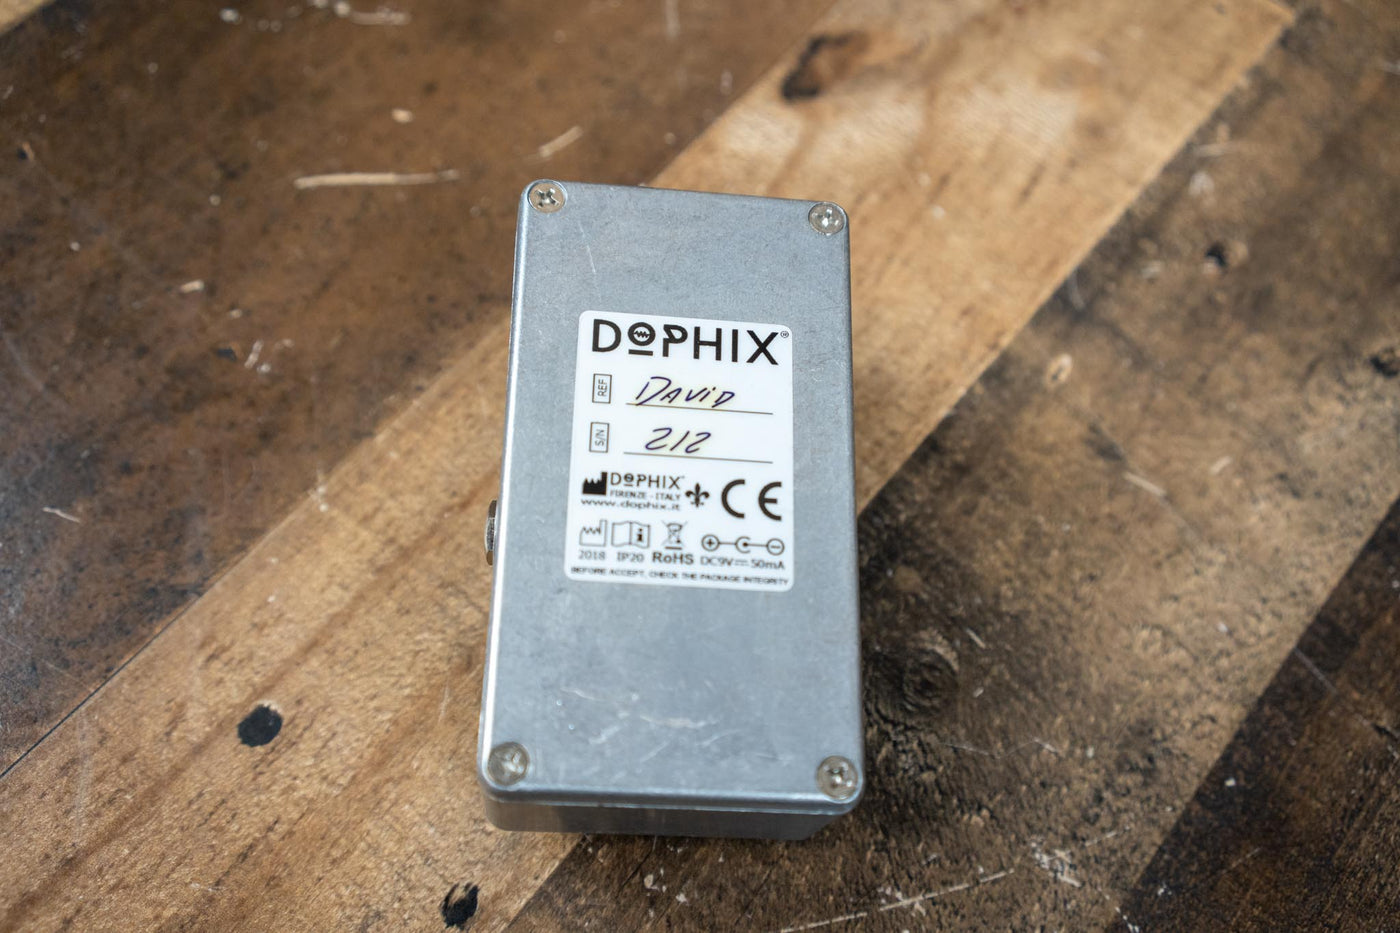 Dophix David Distortion Guitar Effects pedal w/ Box